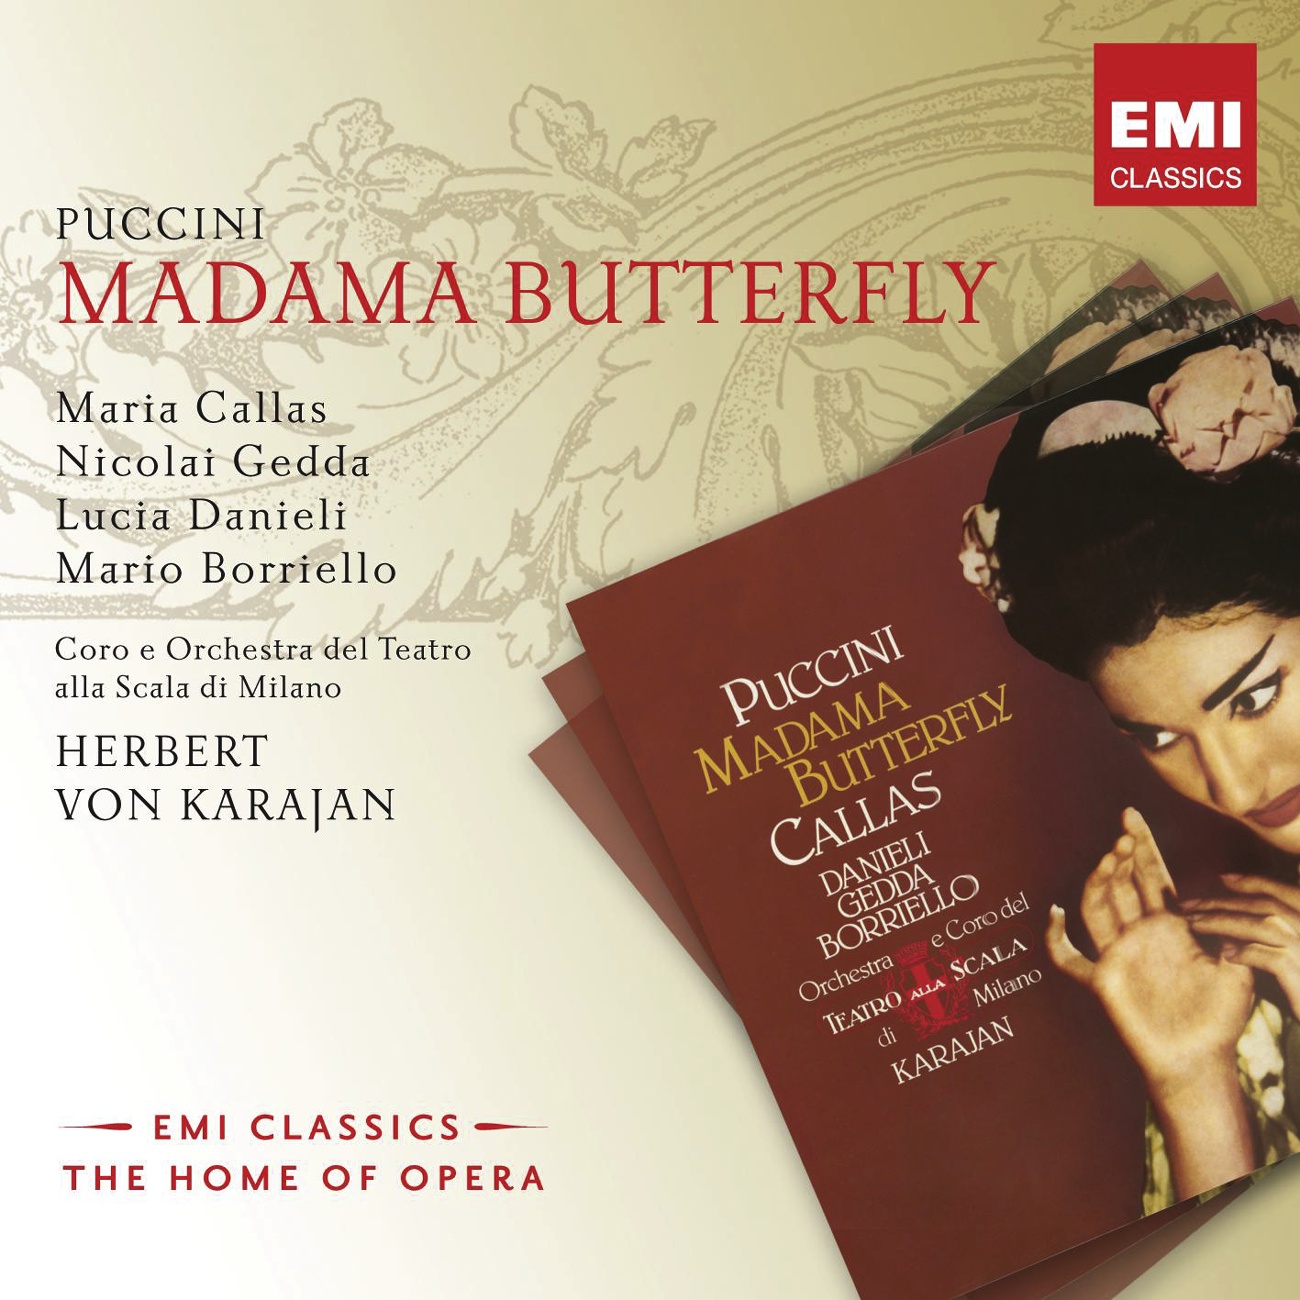 Madama Butterfly (2008 Remastered Version), Act II, Second Part: Gllielo dirai?...Premetto